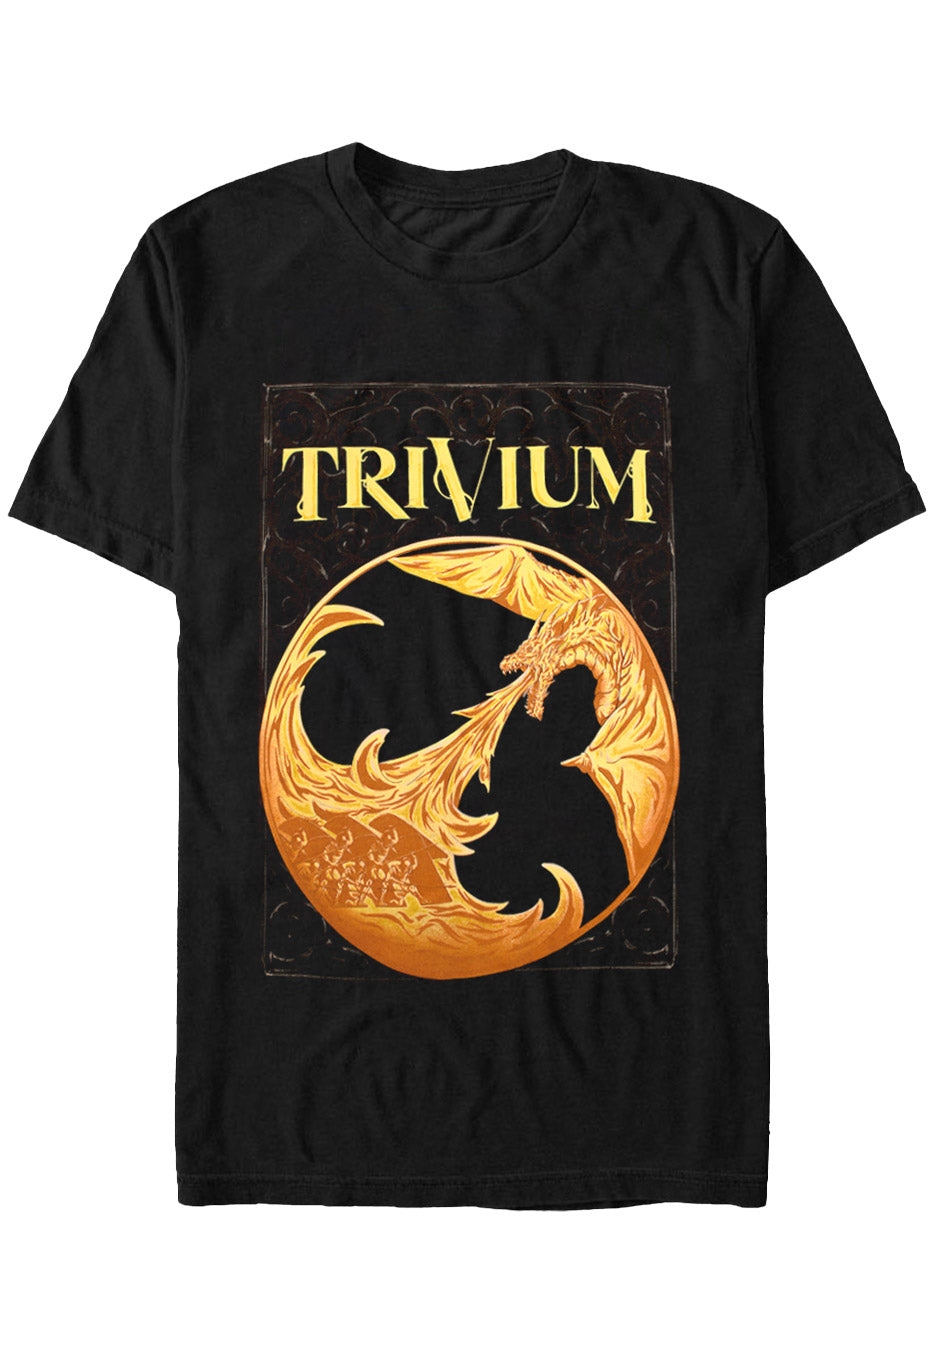 Trivium - Gold Dragon - T-Shirt